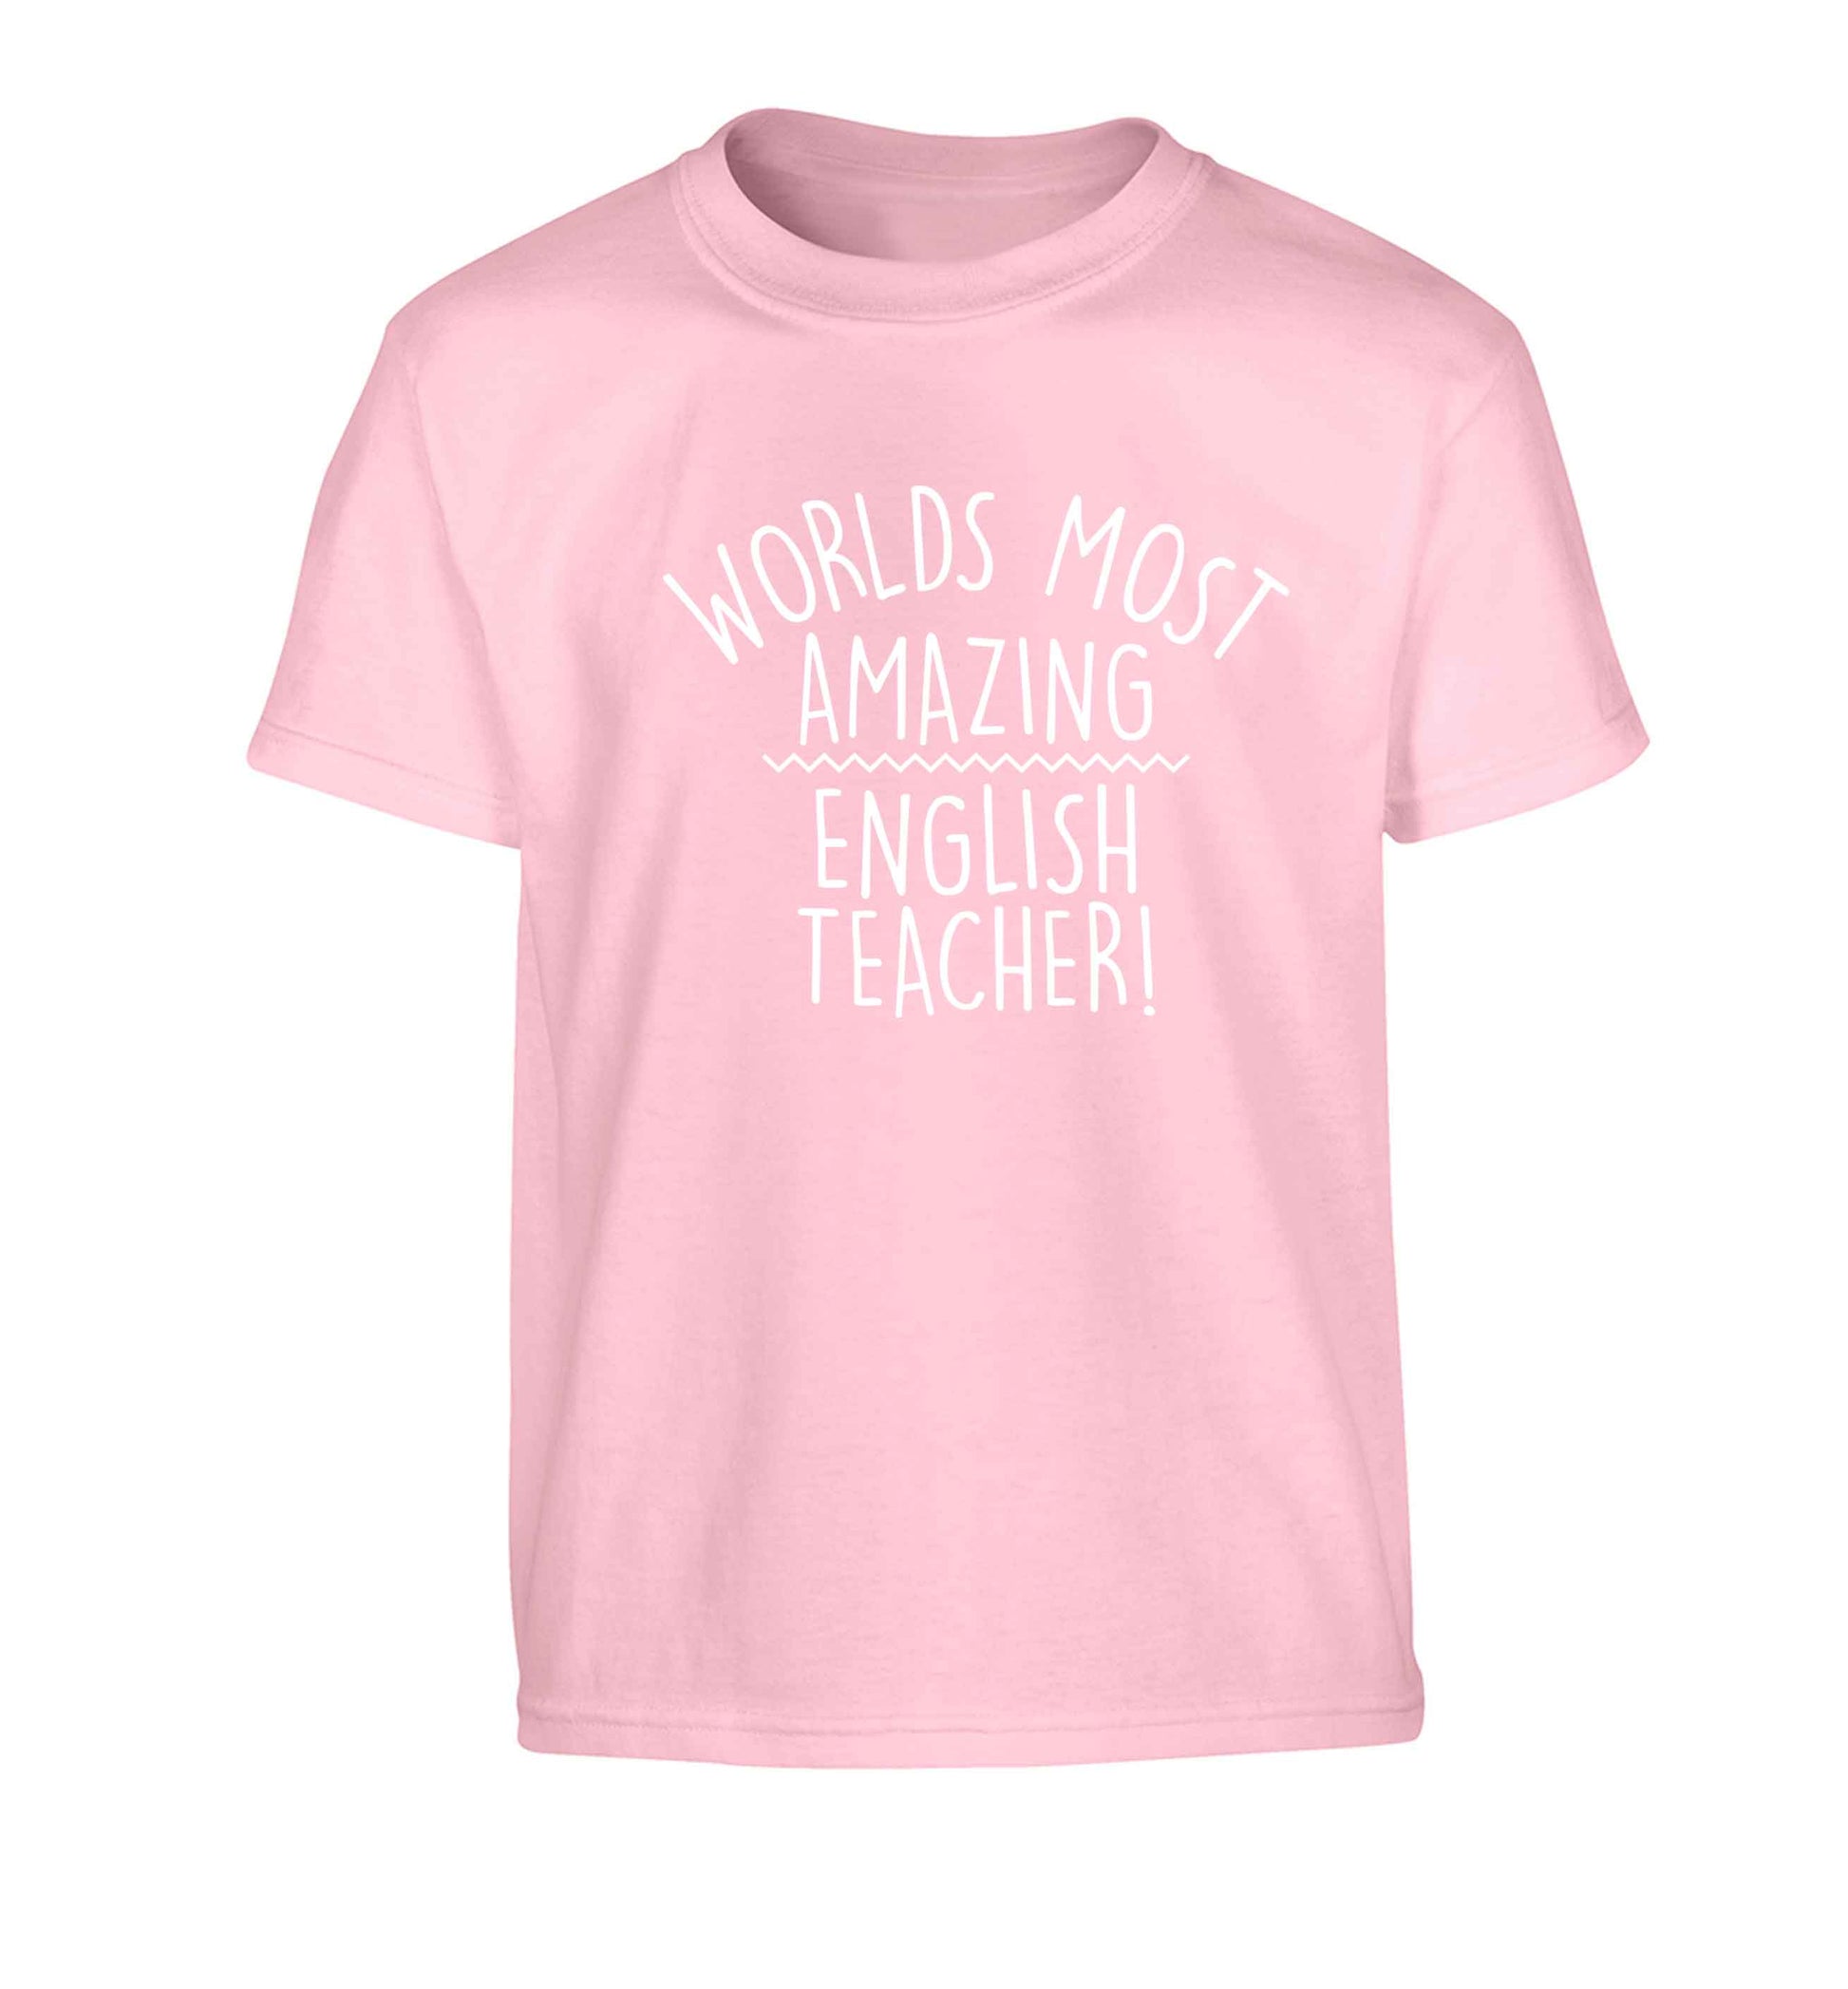 Worlds most amazing English teacher Children's light pink Tshirt 12-13 Years